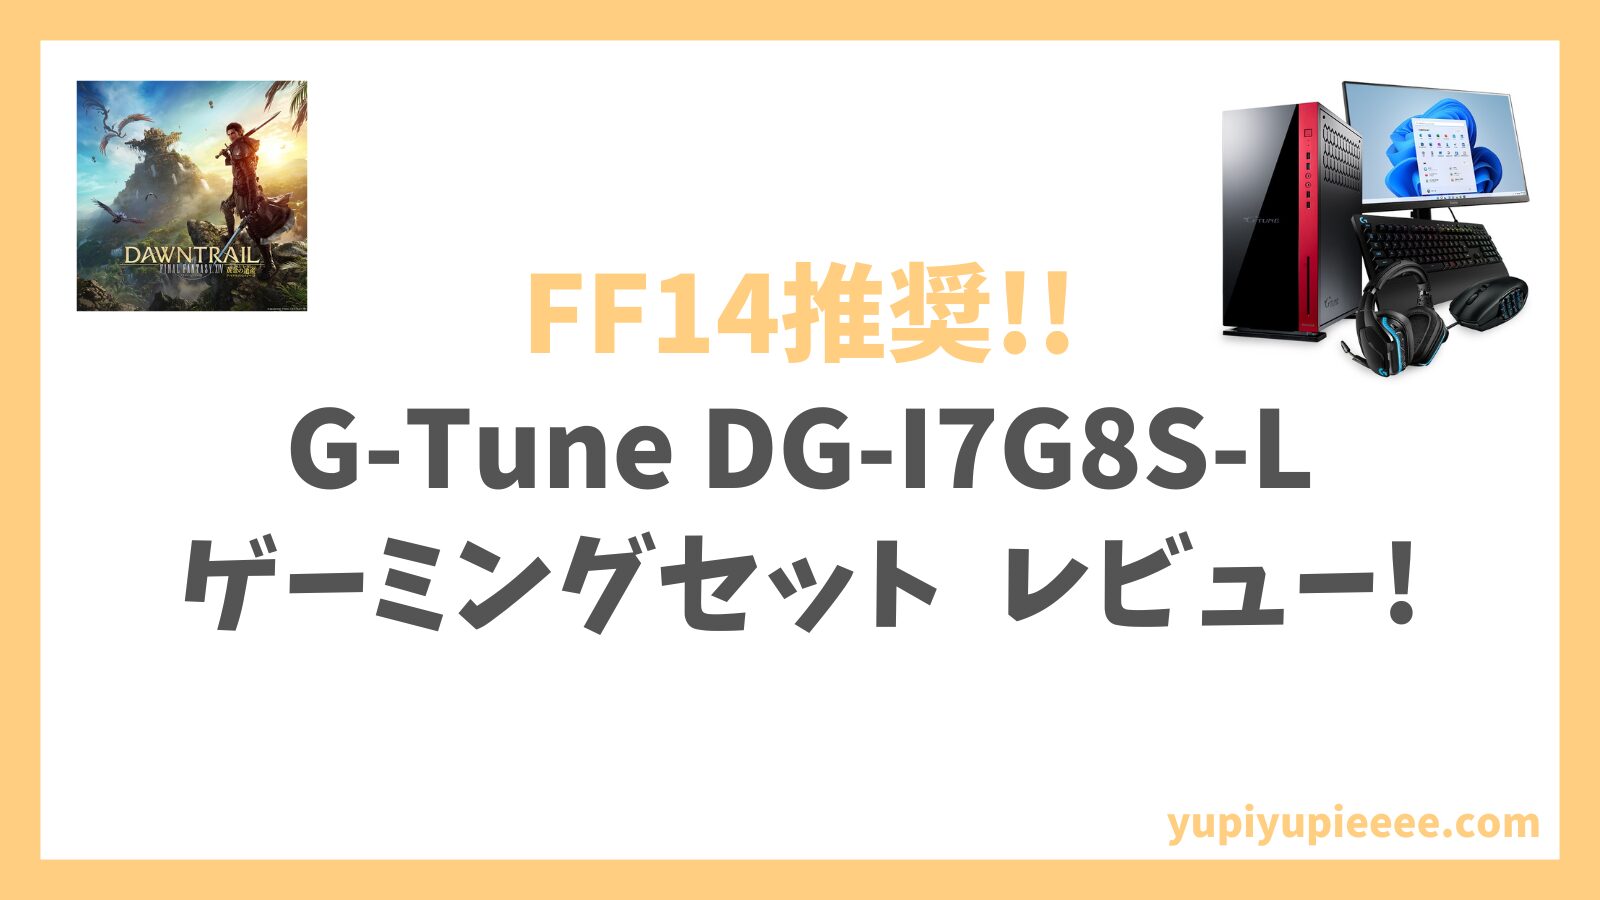 G-Tune DG-I7G8S-FF14セットアイキャッチ